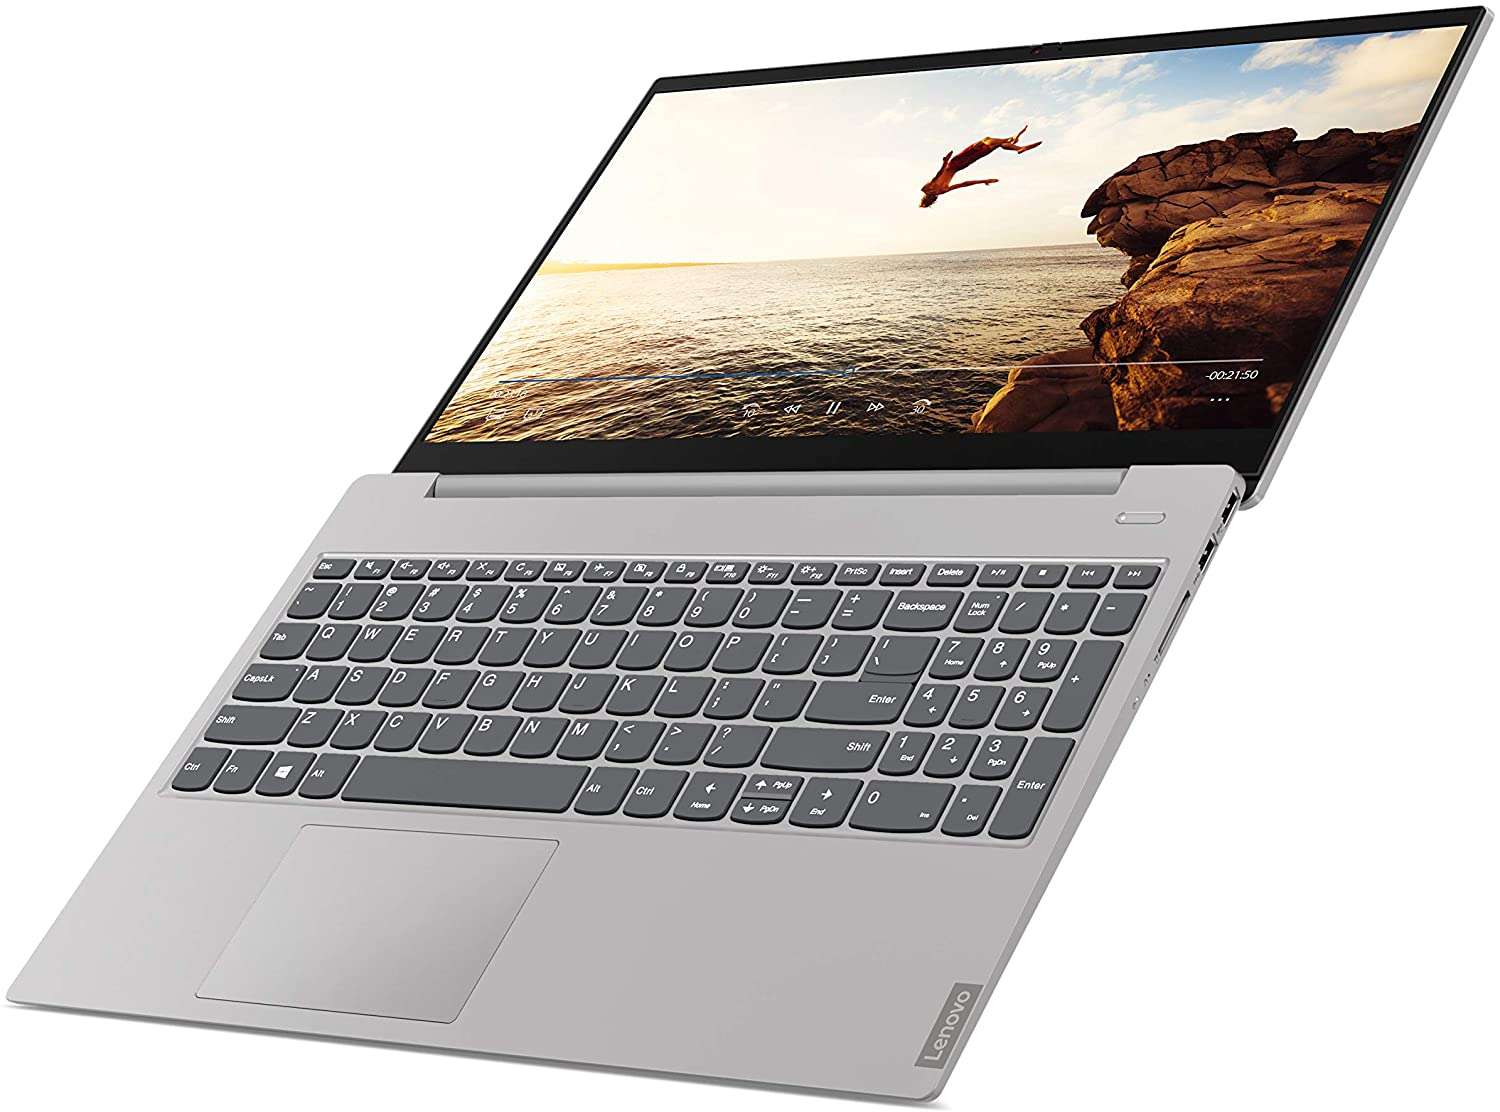 Lenovo Ideapad S340 Laptop With 156 Inch Display Intel Core I3 8145u